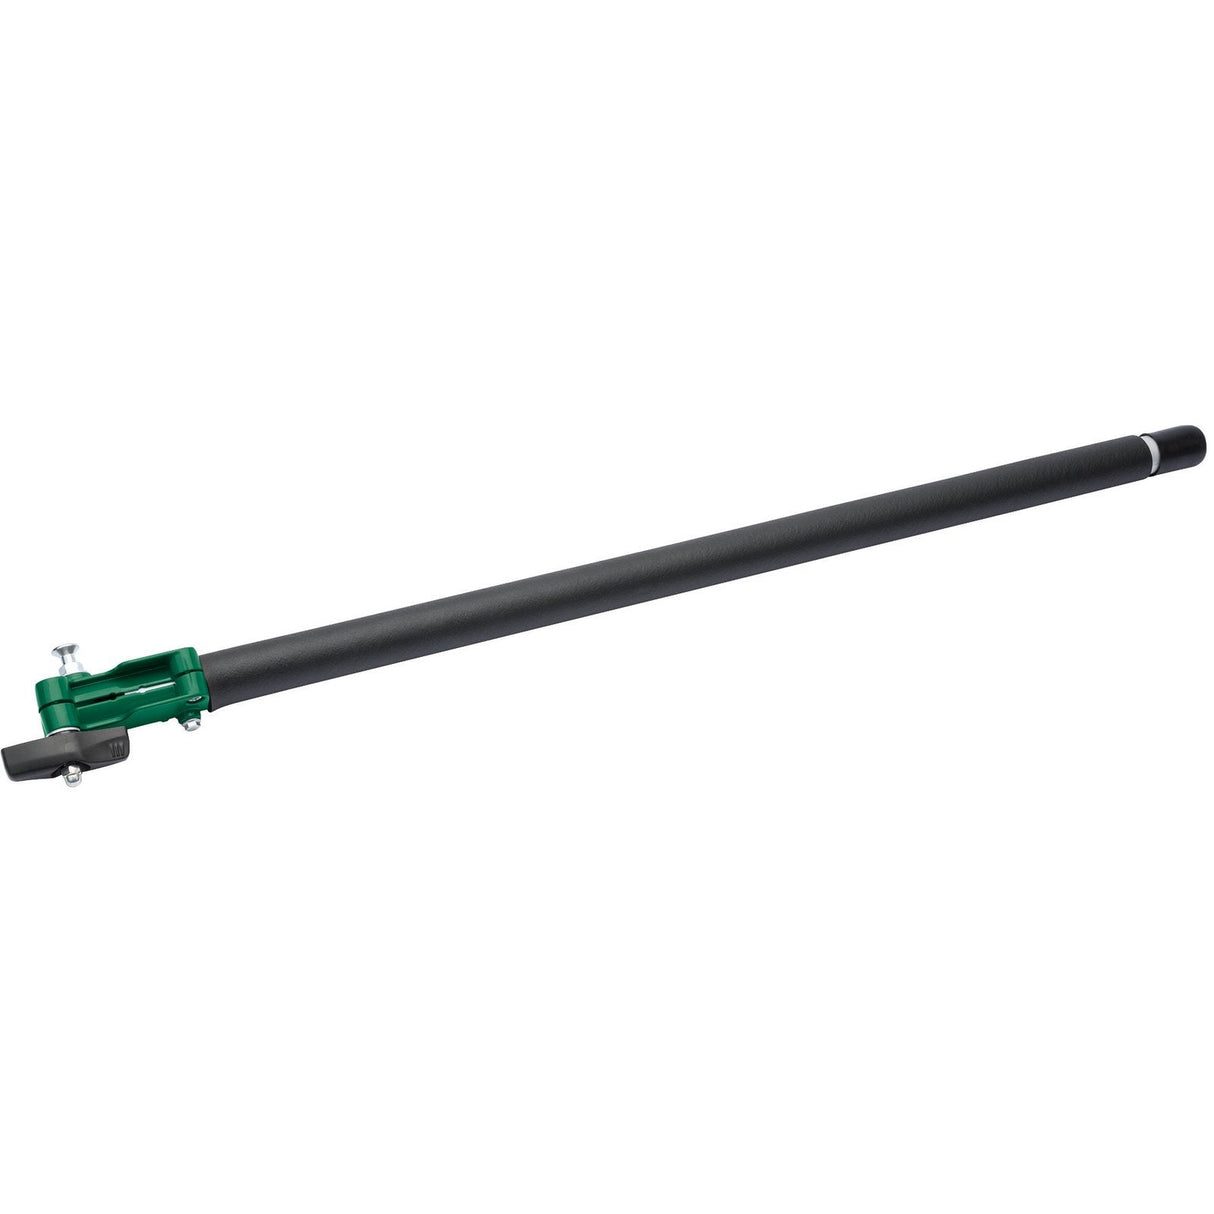 Draper 650mm Extension Pole For 31088 Petrol 4 In 1 Garden Tool - GTA5B - Farming Parts